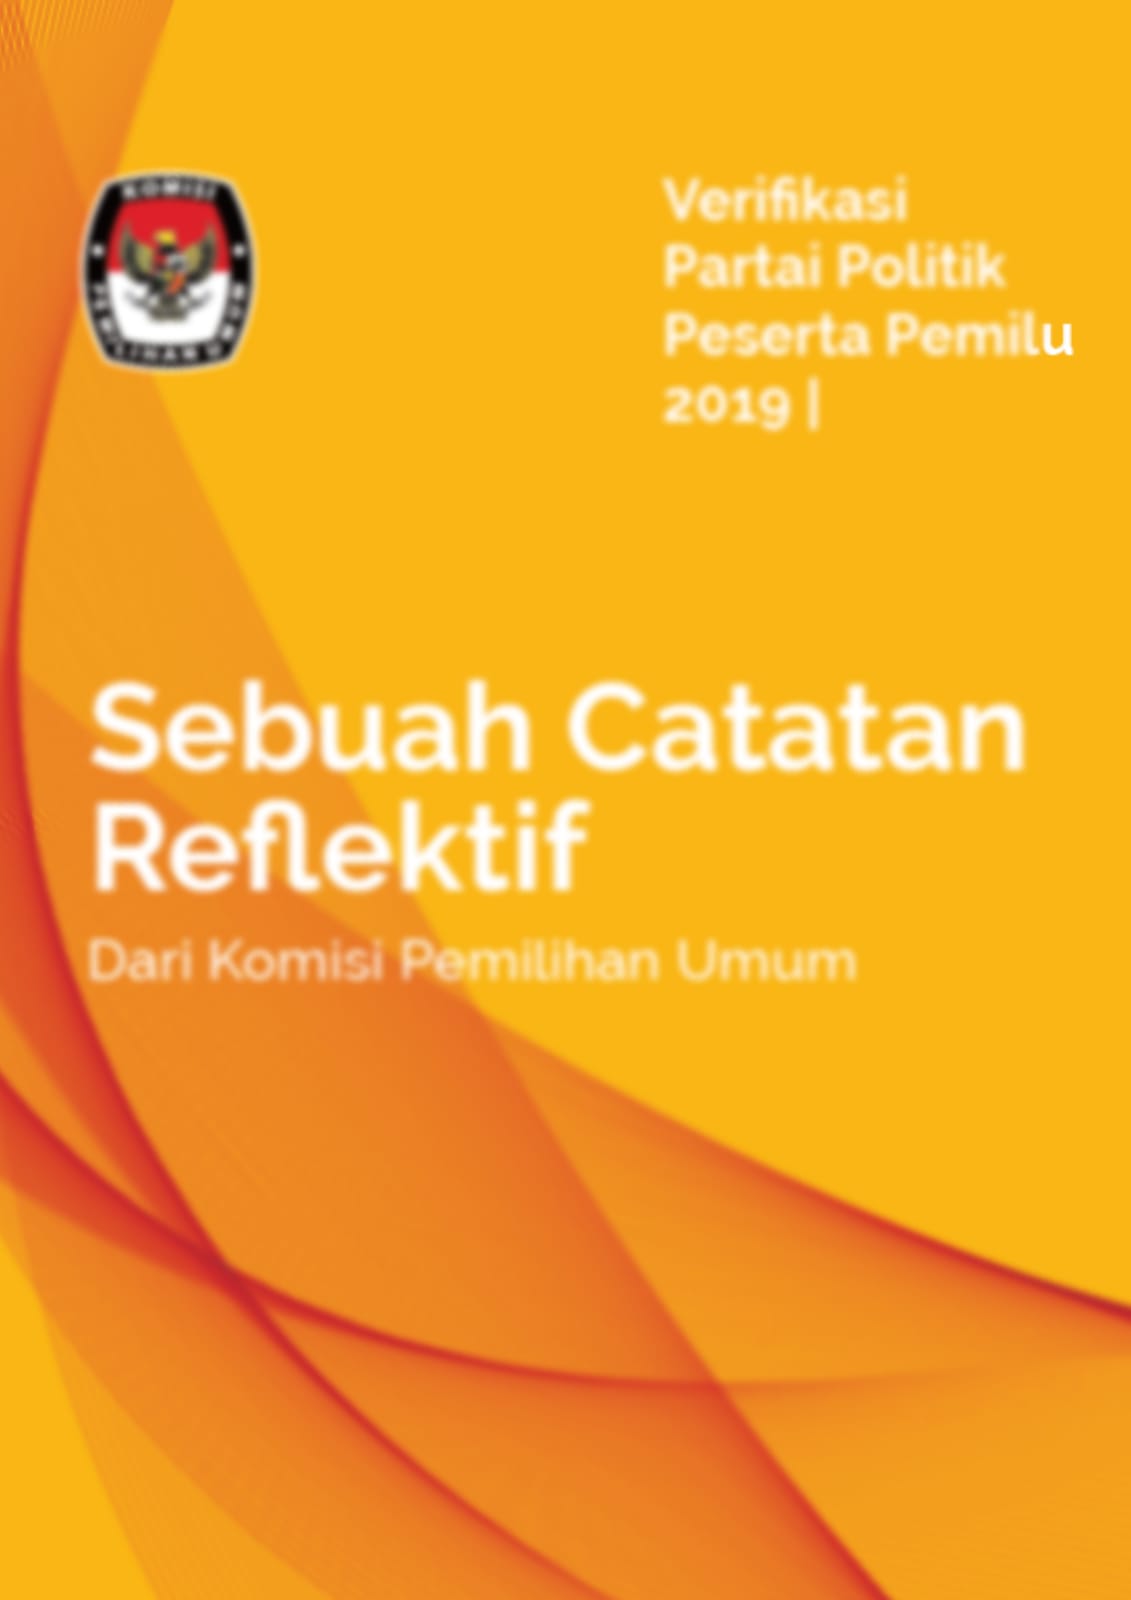 Verifikasi Partai Politik Peserta Pemilu 2019 Sebuah Catatan Reflektif dari Komisi Pemilihan Umum